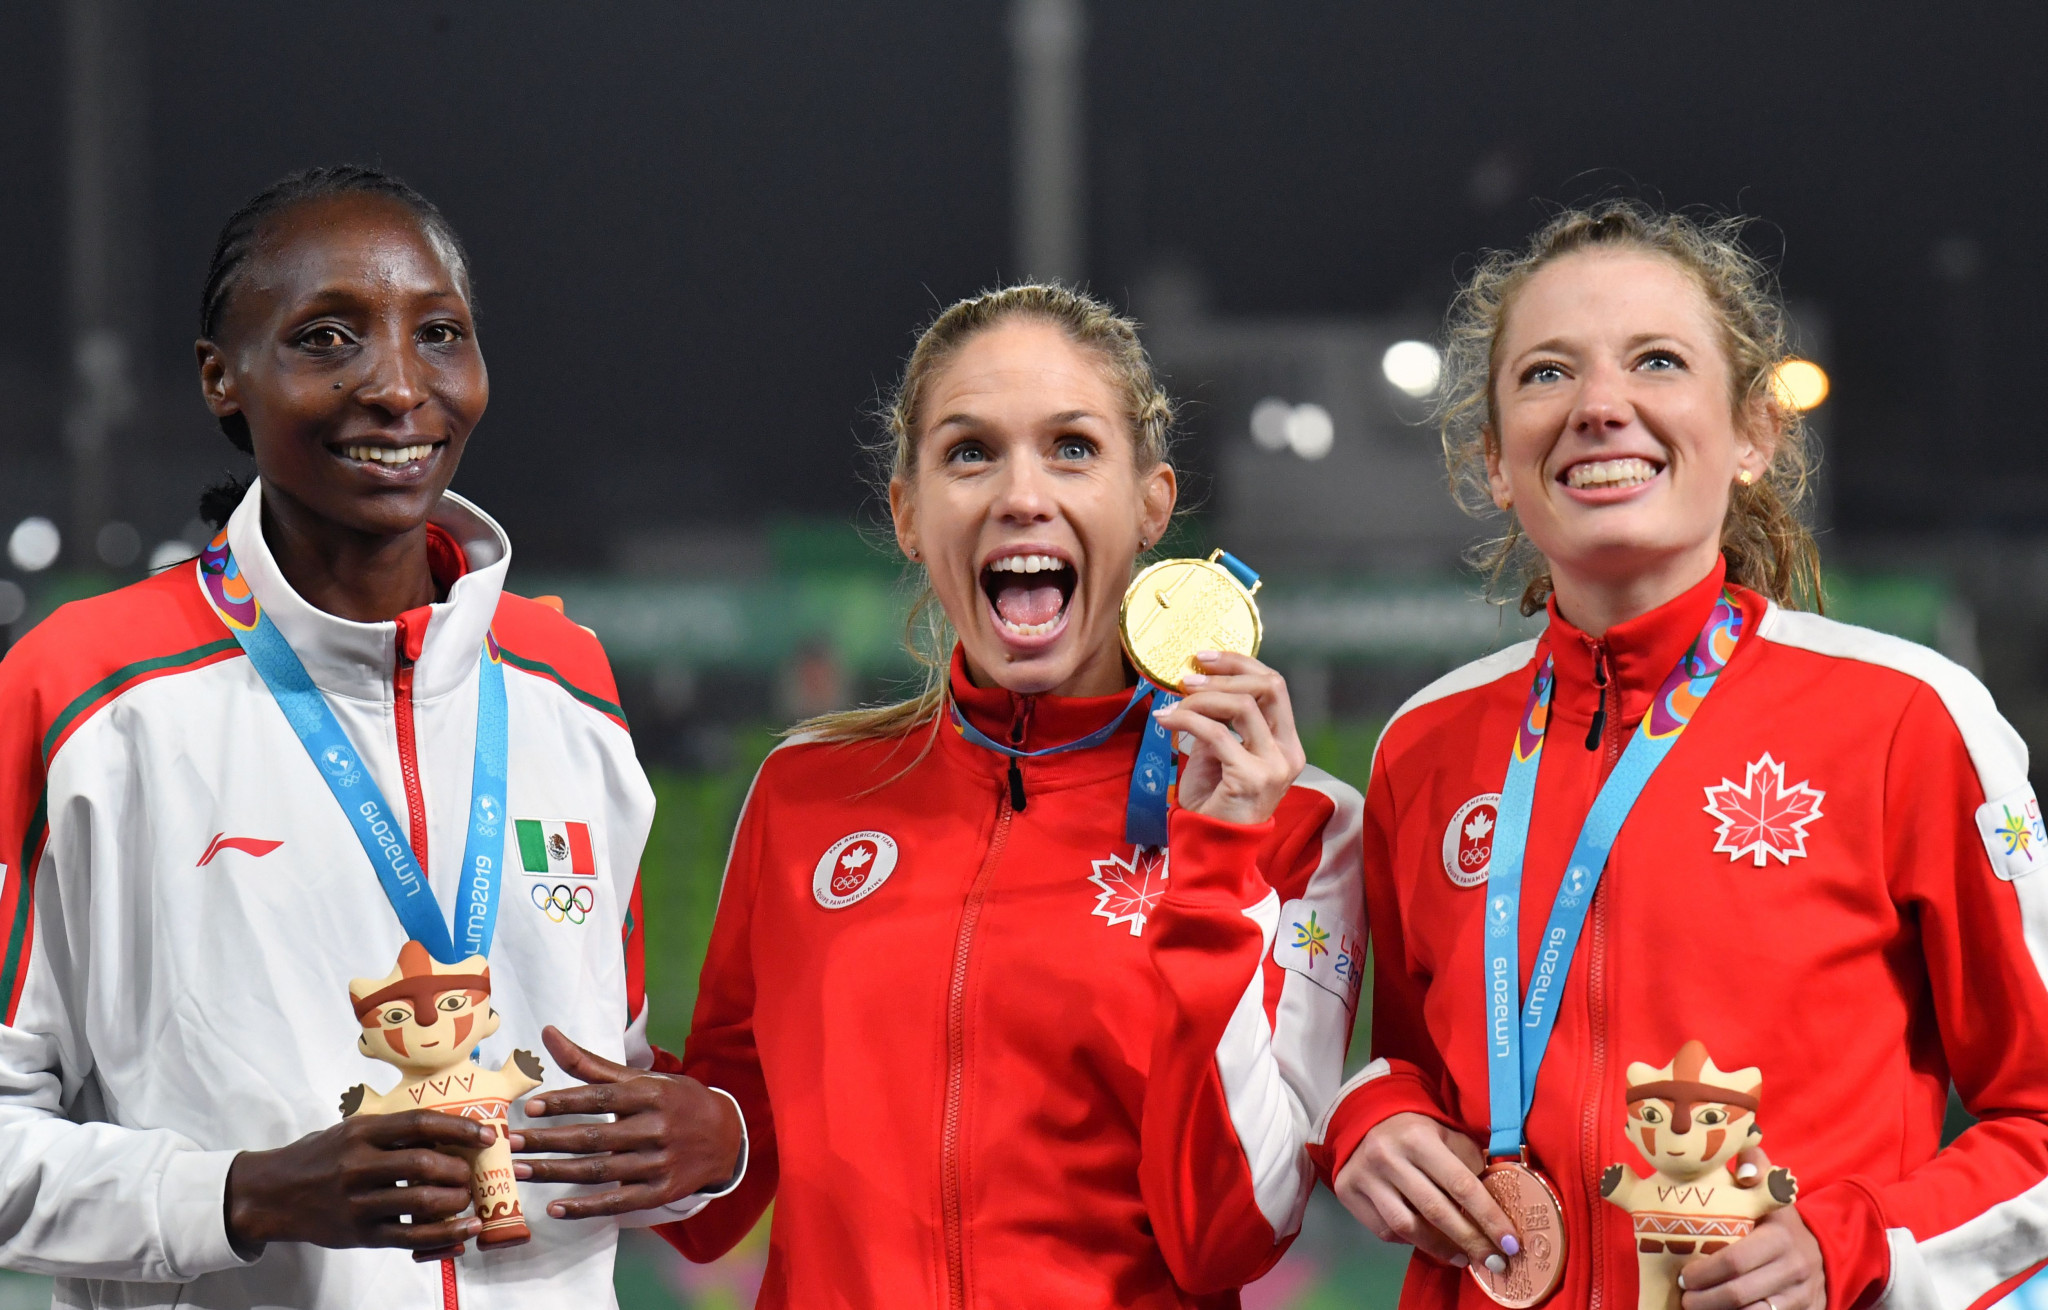 Canada's Natasha Wodak won the women's 10,000m title ©Getty Images